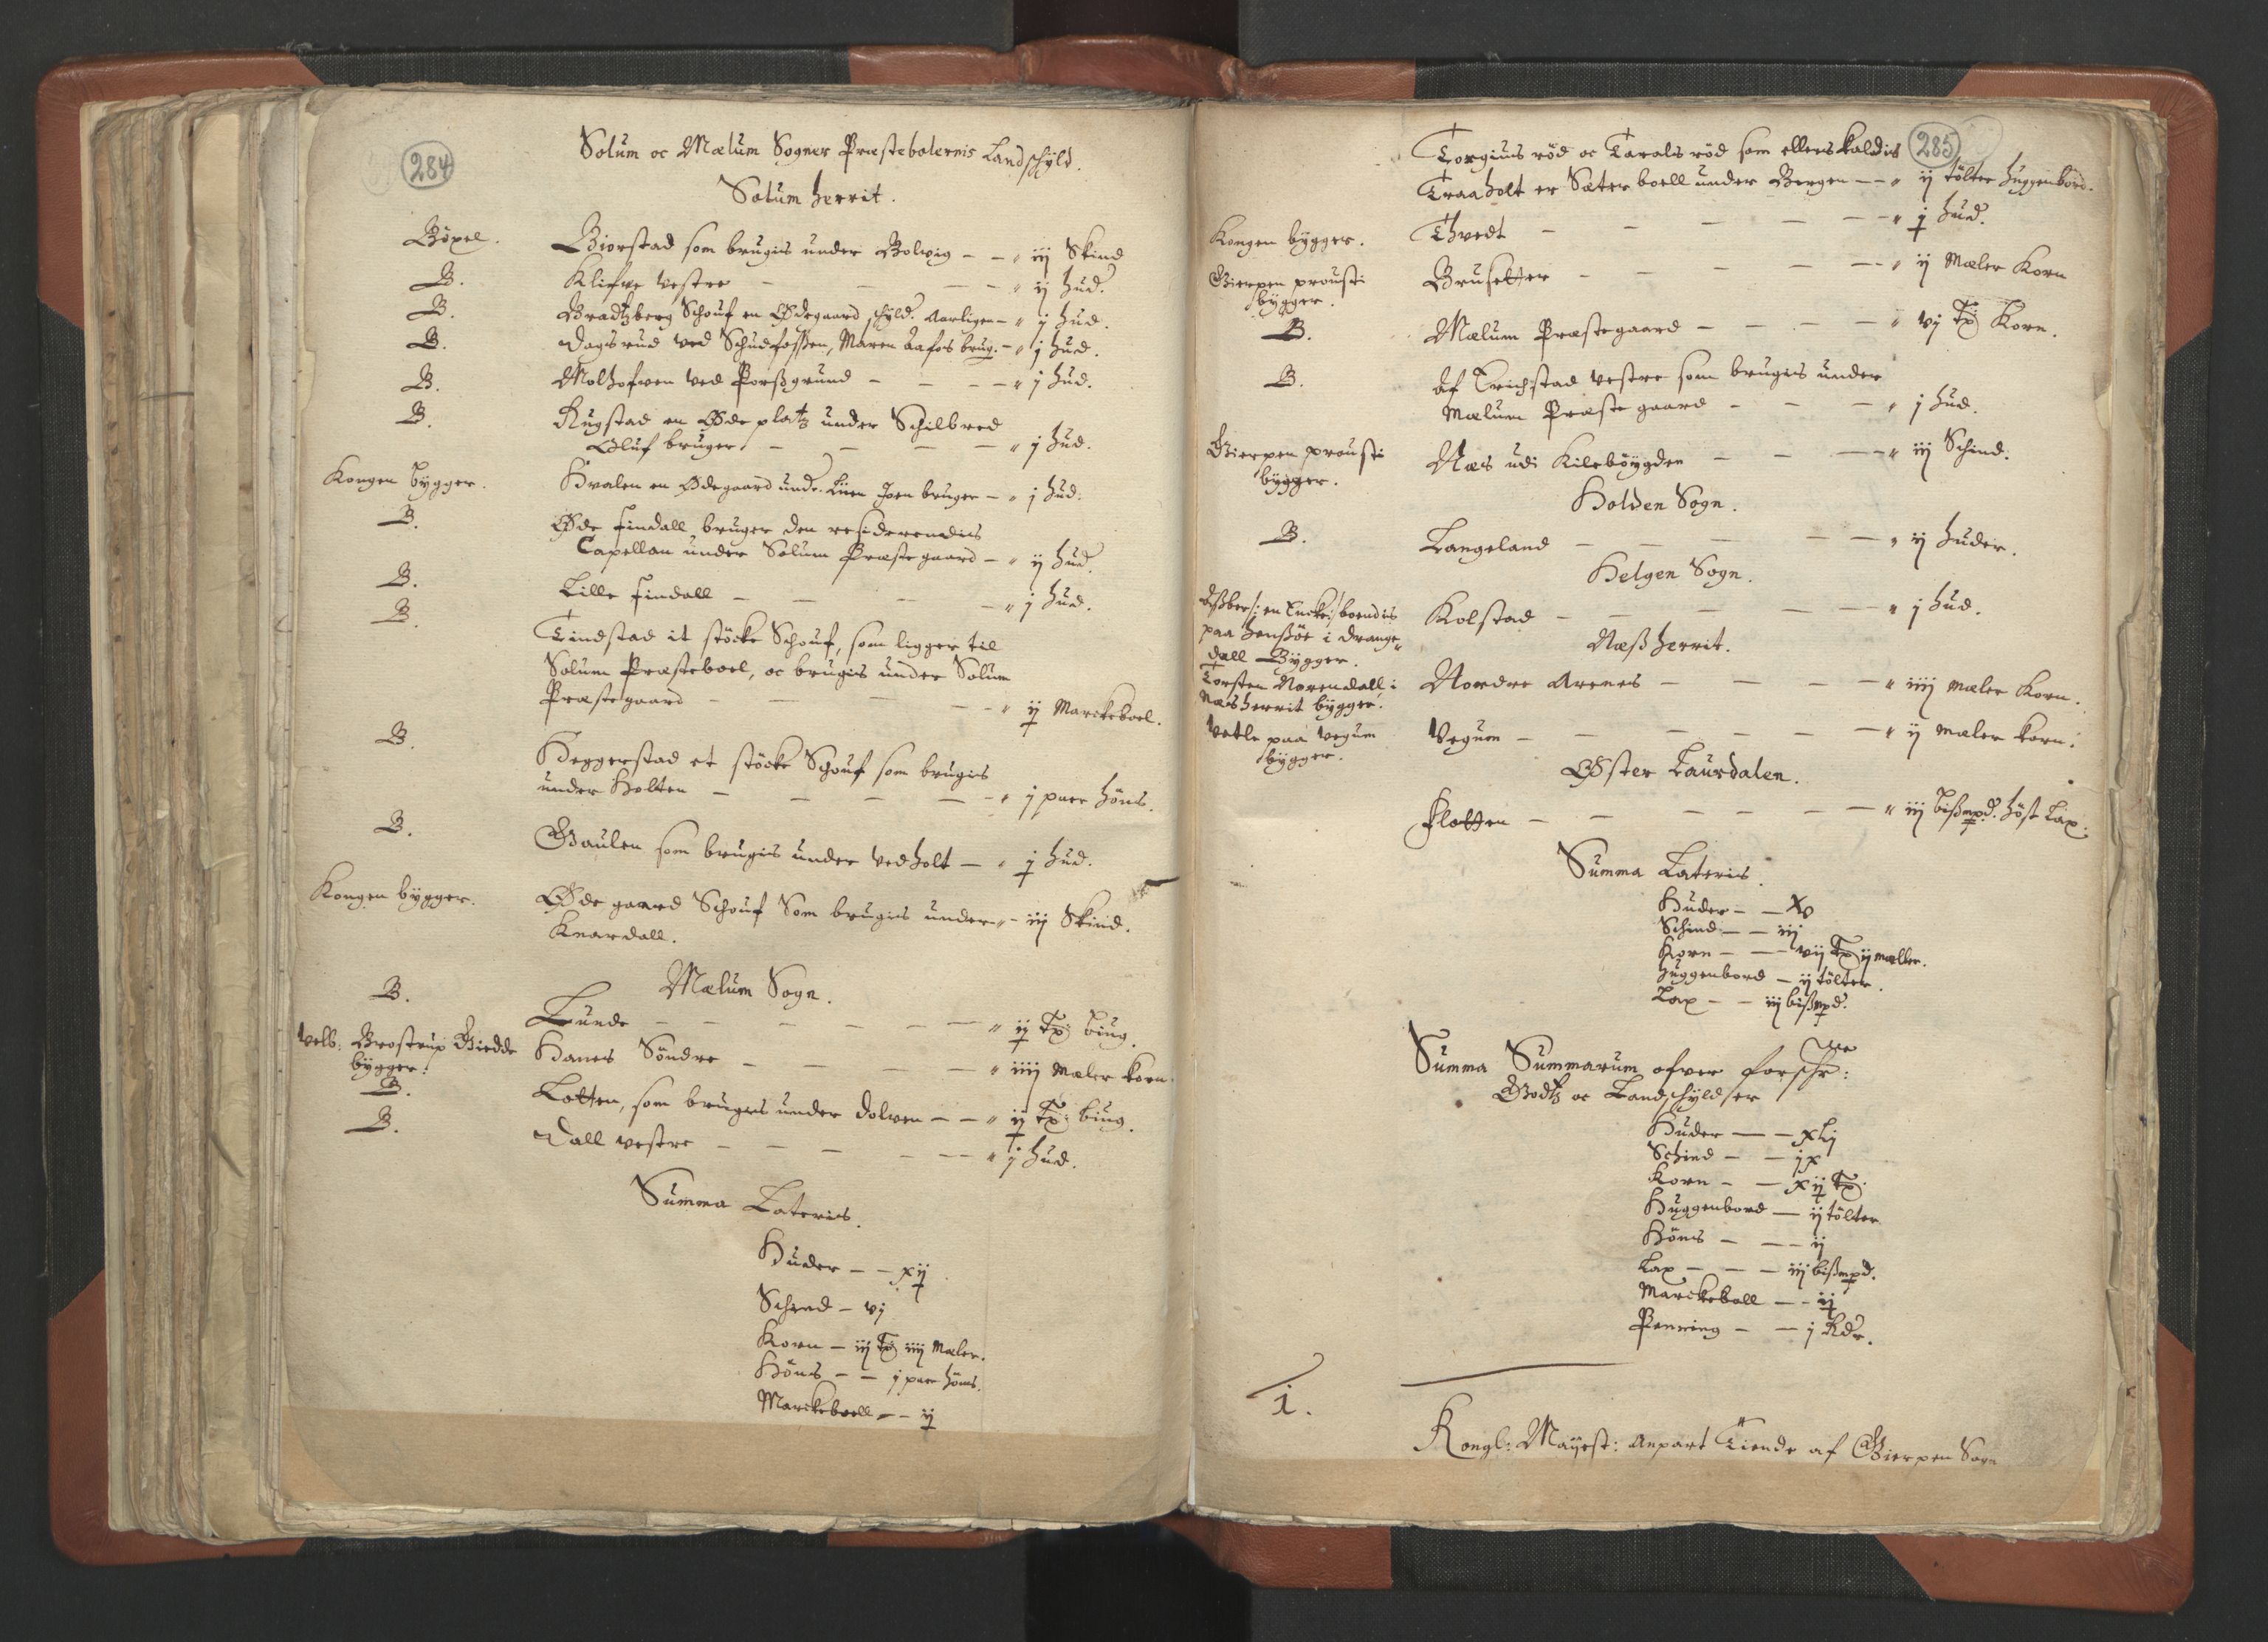 RA, Vicar's Census 1664-1666, no. 12: Øvre Telemark deanery, Nedre Telemark deanery and Bamble deanery, 1664-1666, p. 284-285